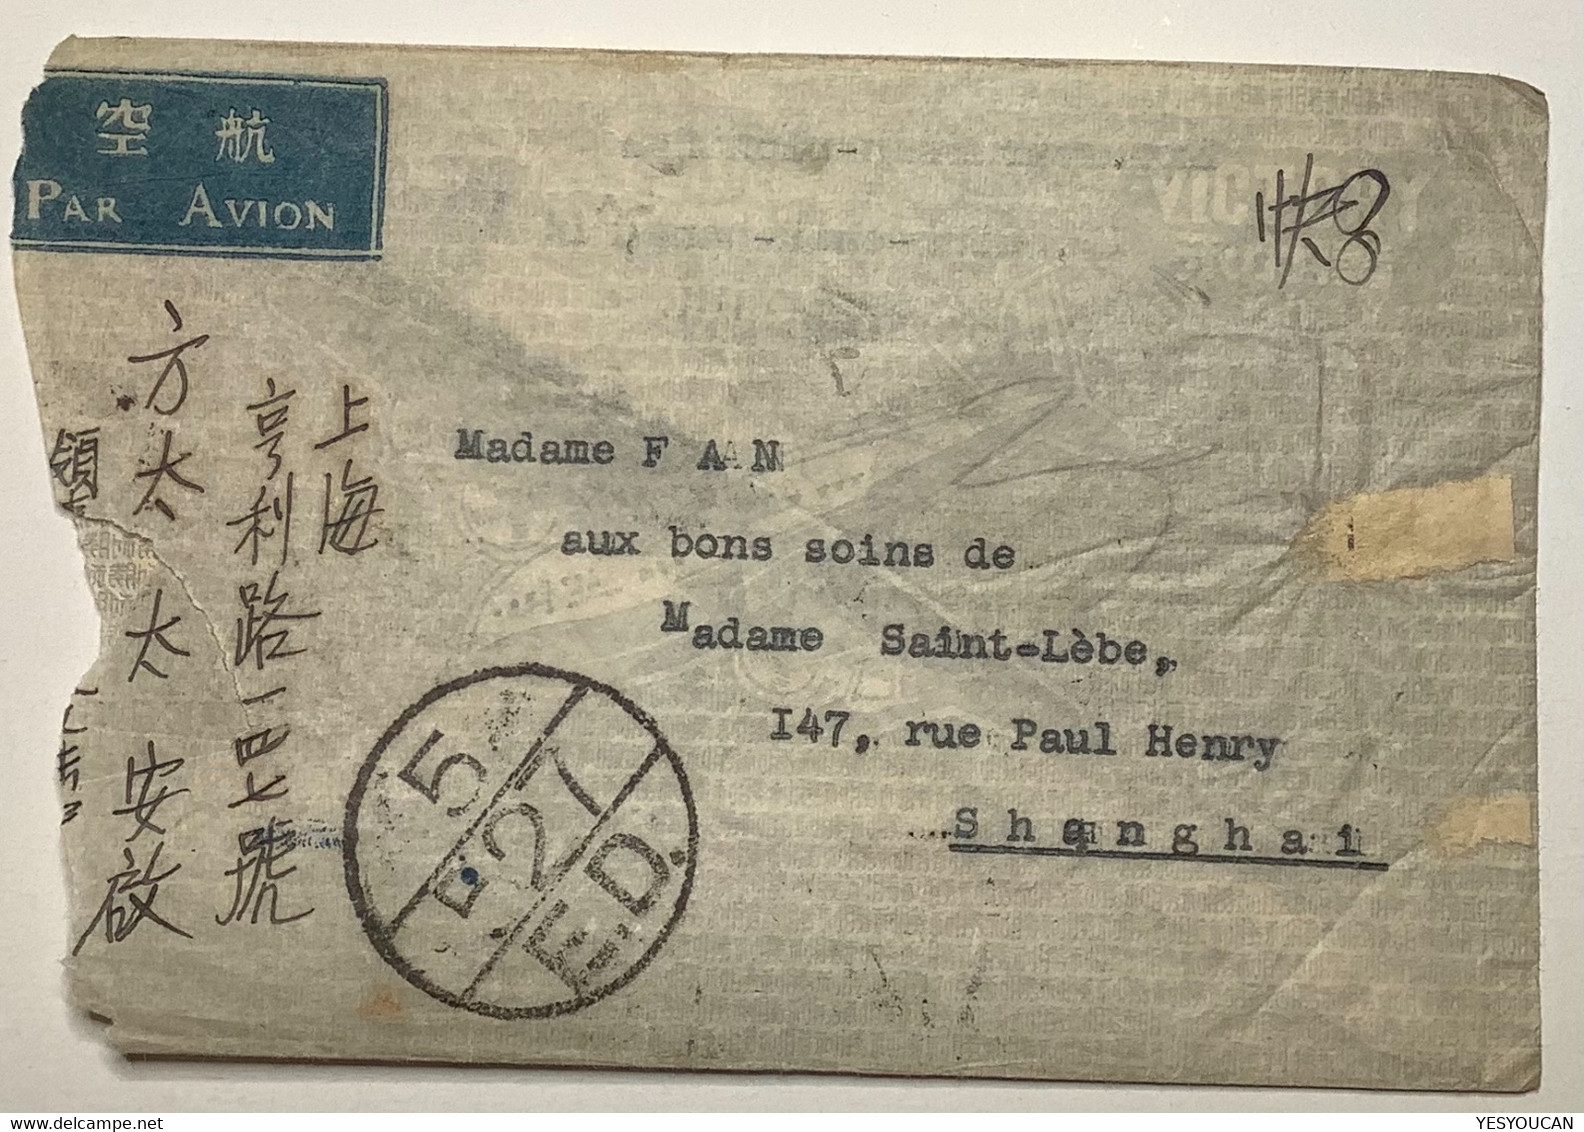 CHUNGKING = PAHSIEN ~1943-1944 SCARCE SHANGHAI EXPRESS POSTMARK "5/527/E.D"cover Sent PAR AVION (China Chine Lettre - 1912-1949 Republic